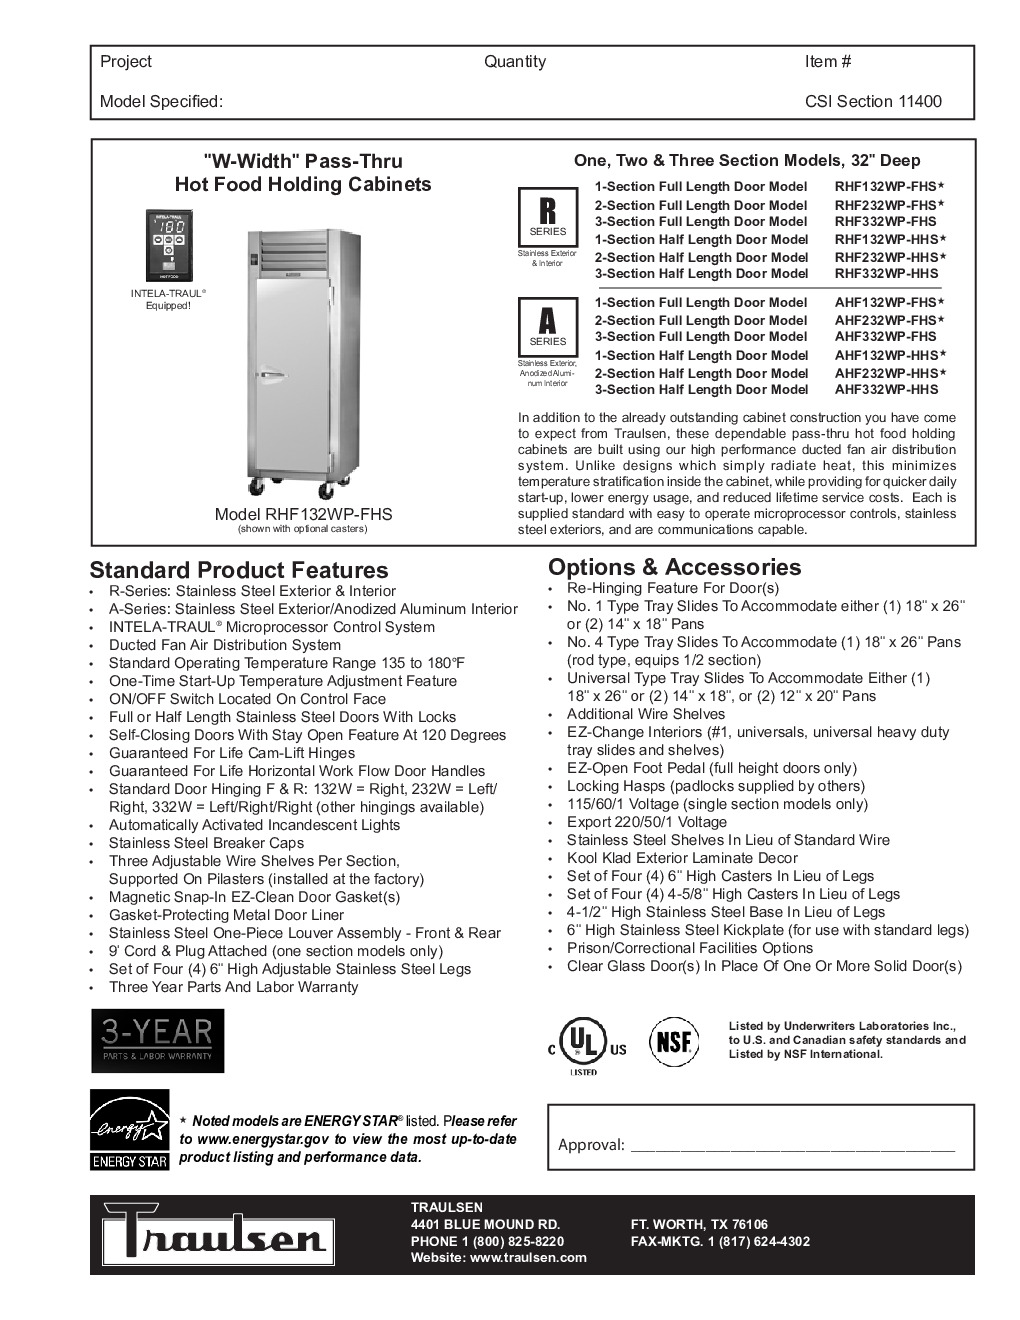 Traulsen RHF332WP-HHG Pass-Thru Heated Cabinet